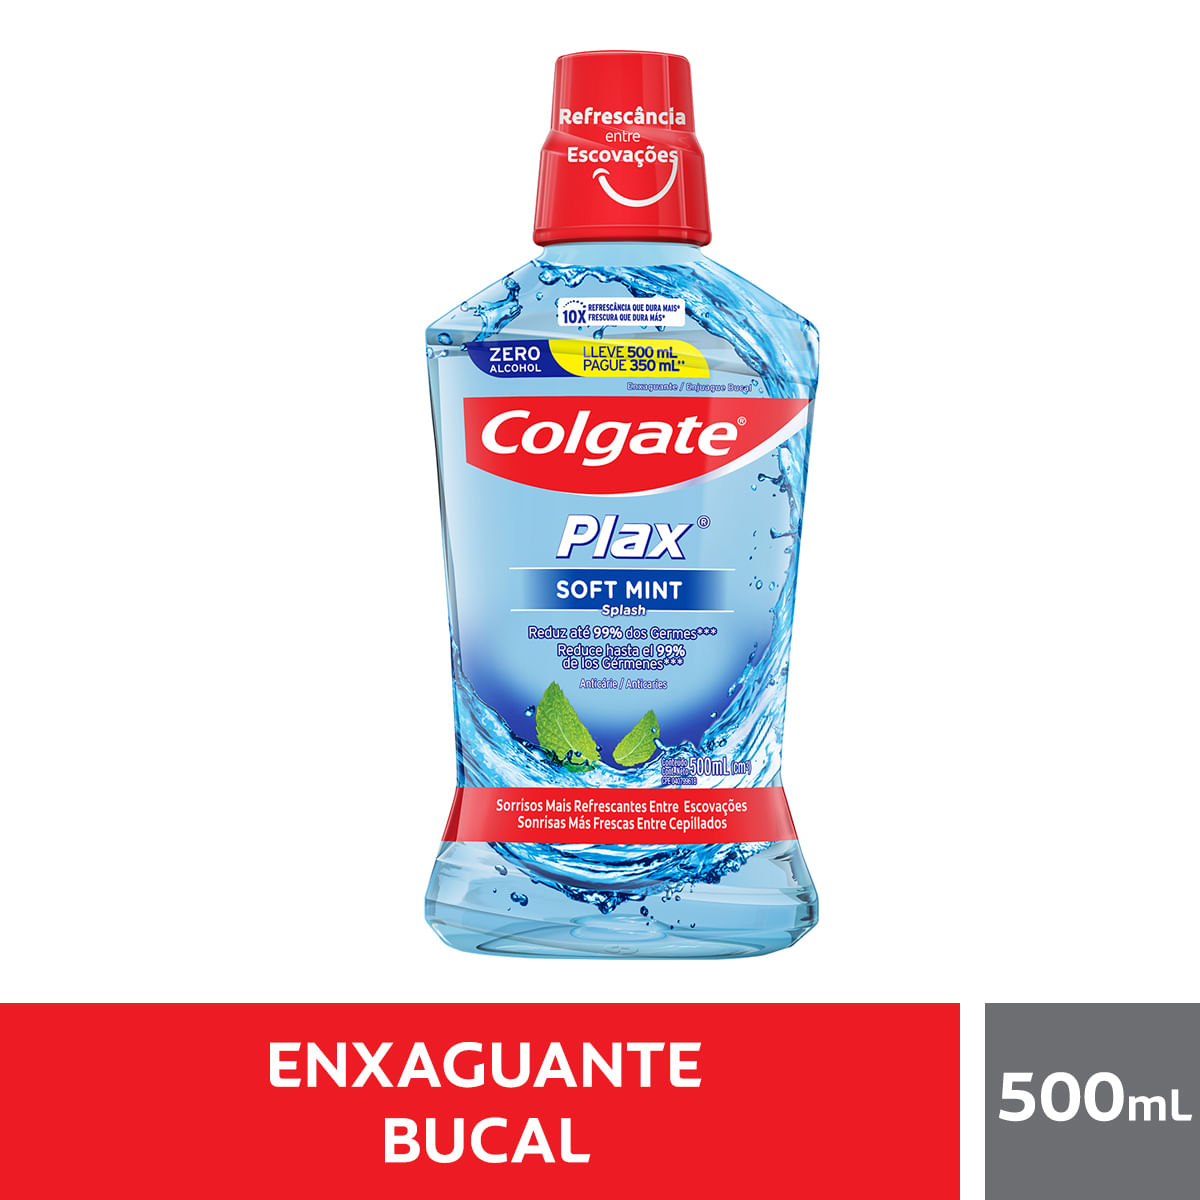 enxaguante-bucal-sem-alcool-sem-corante-colgate-plax-soft-mint-500ml-1.jpg